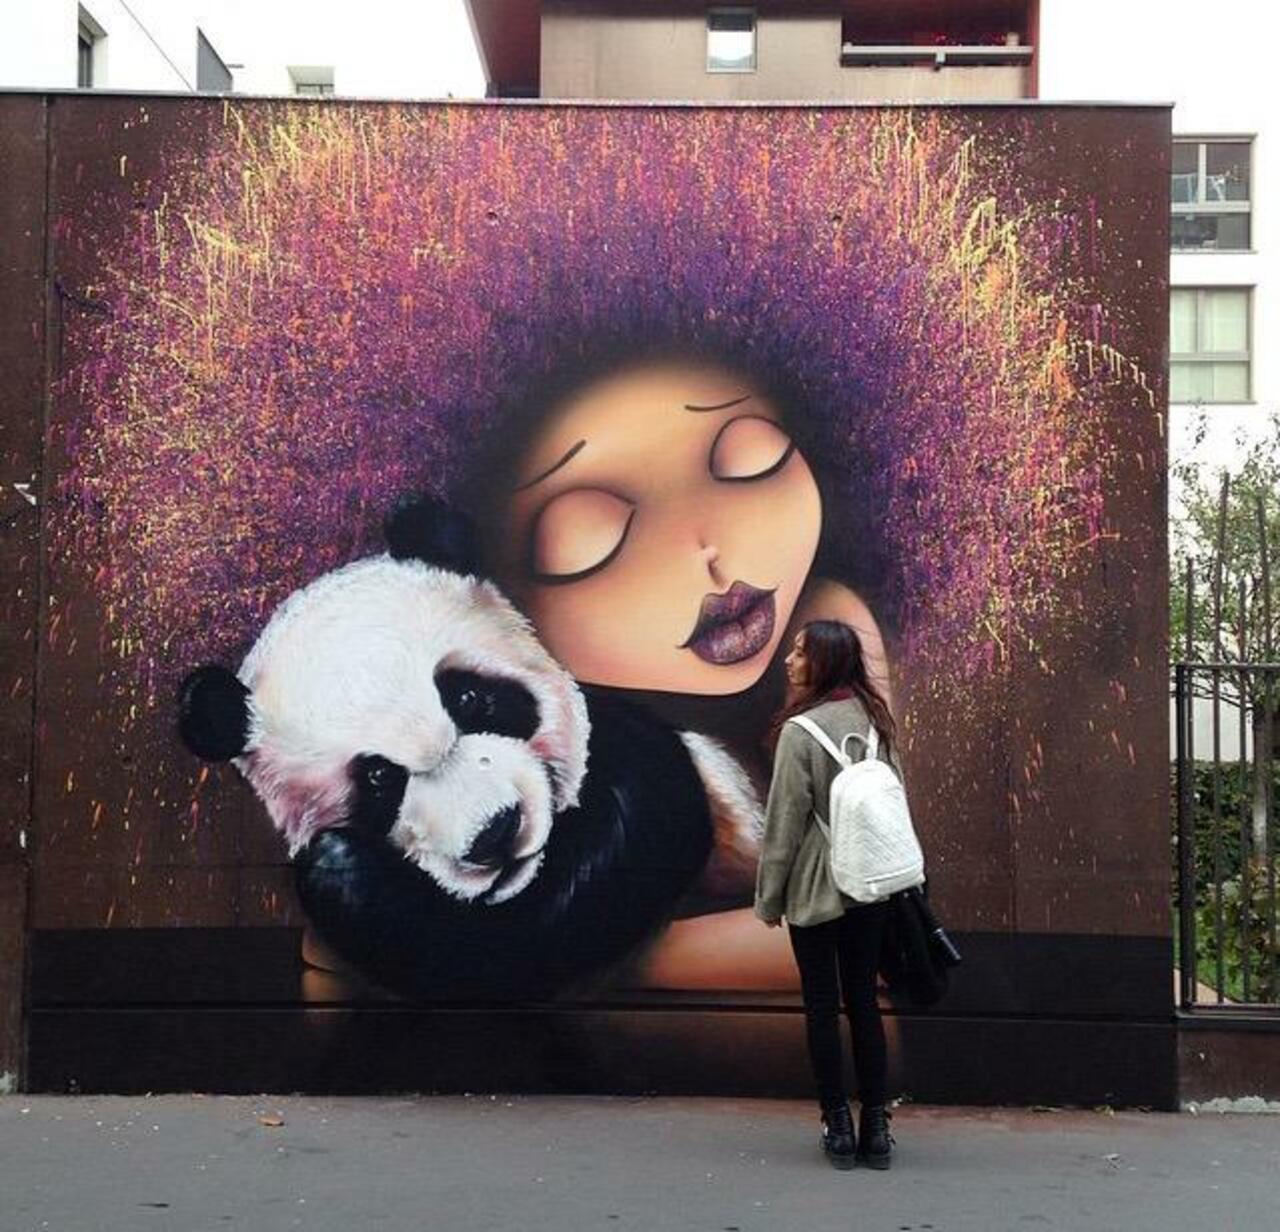 Street Art by VinieGraffiti in Paris 

#art #graffiti #mural #streetart http://t.co/X6cKTzxRPV